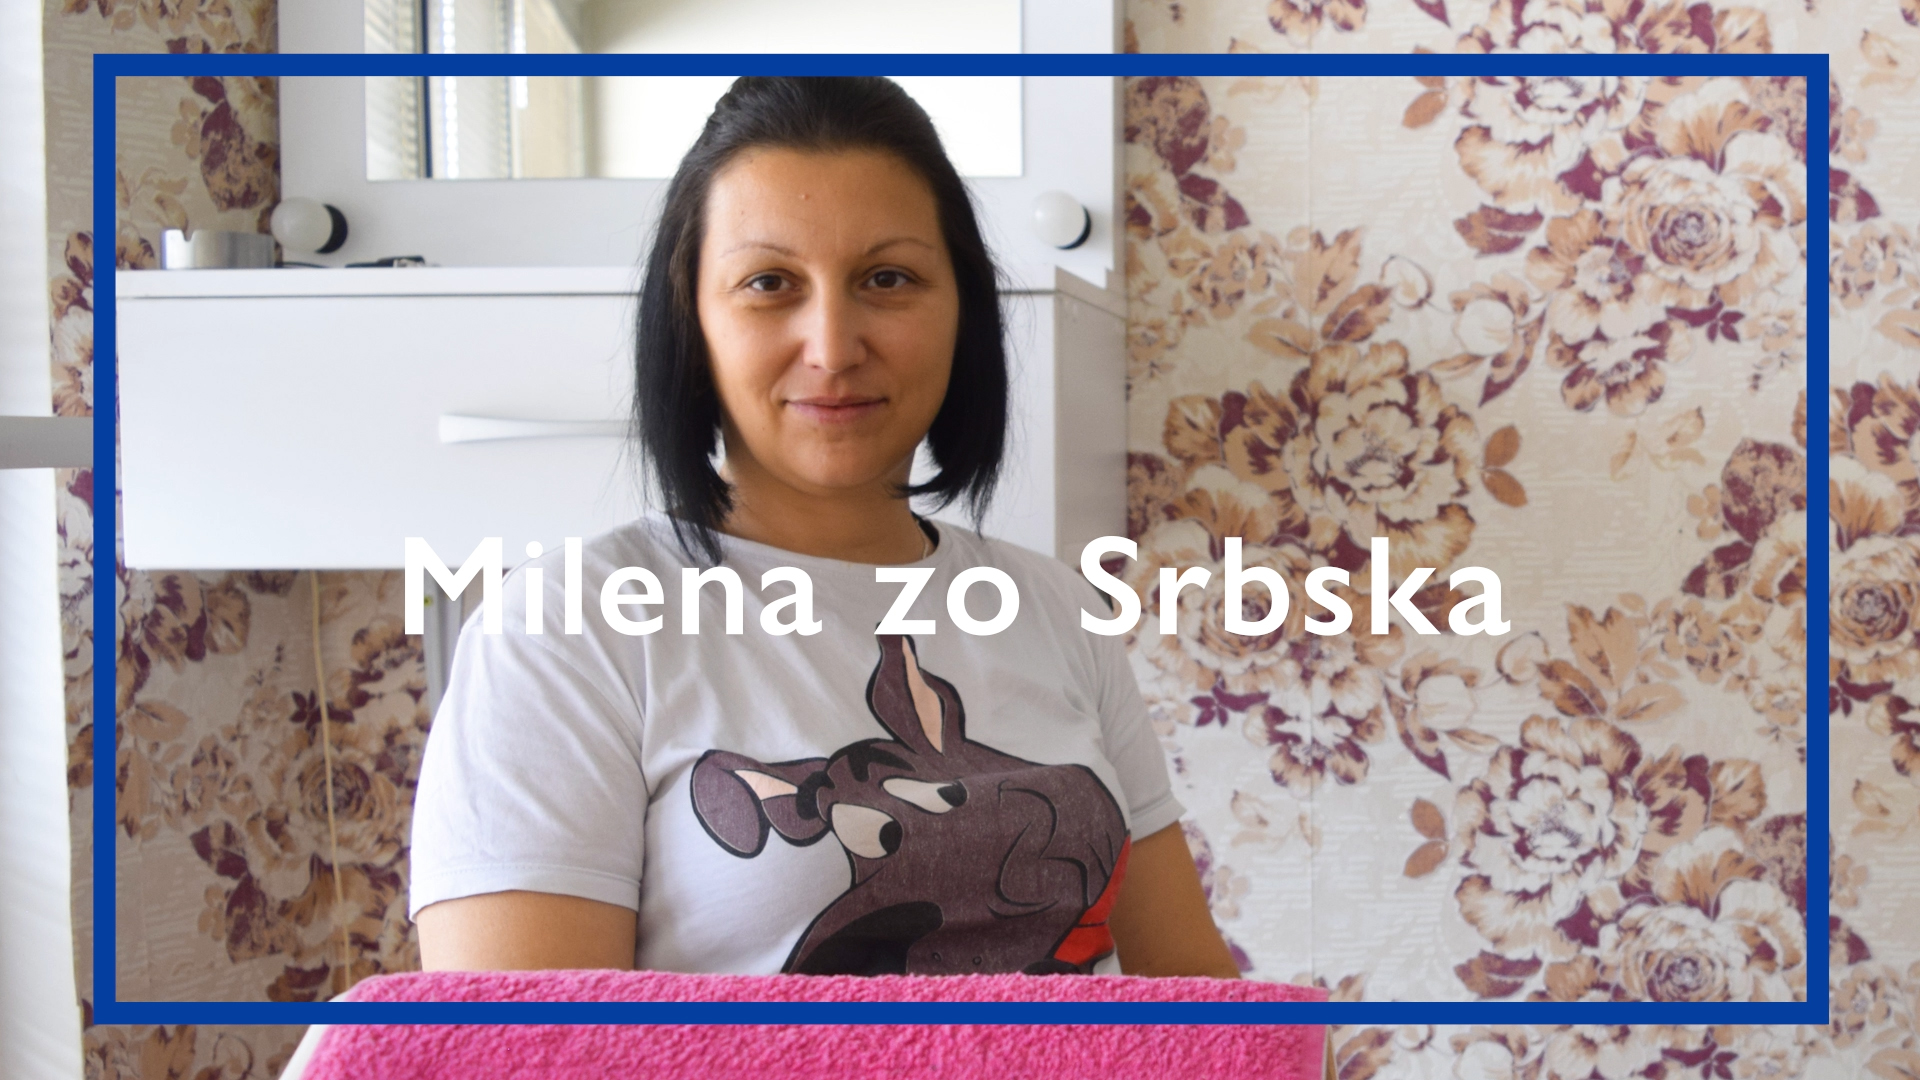 Milena zo Srbska: Pomoc IOM mi priniesla kvalifikáciu, prácu a živobytie